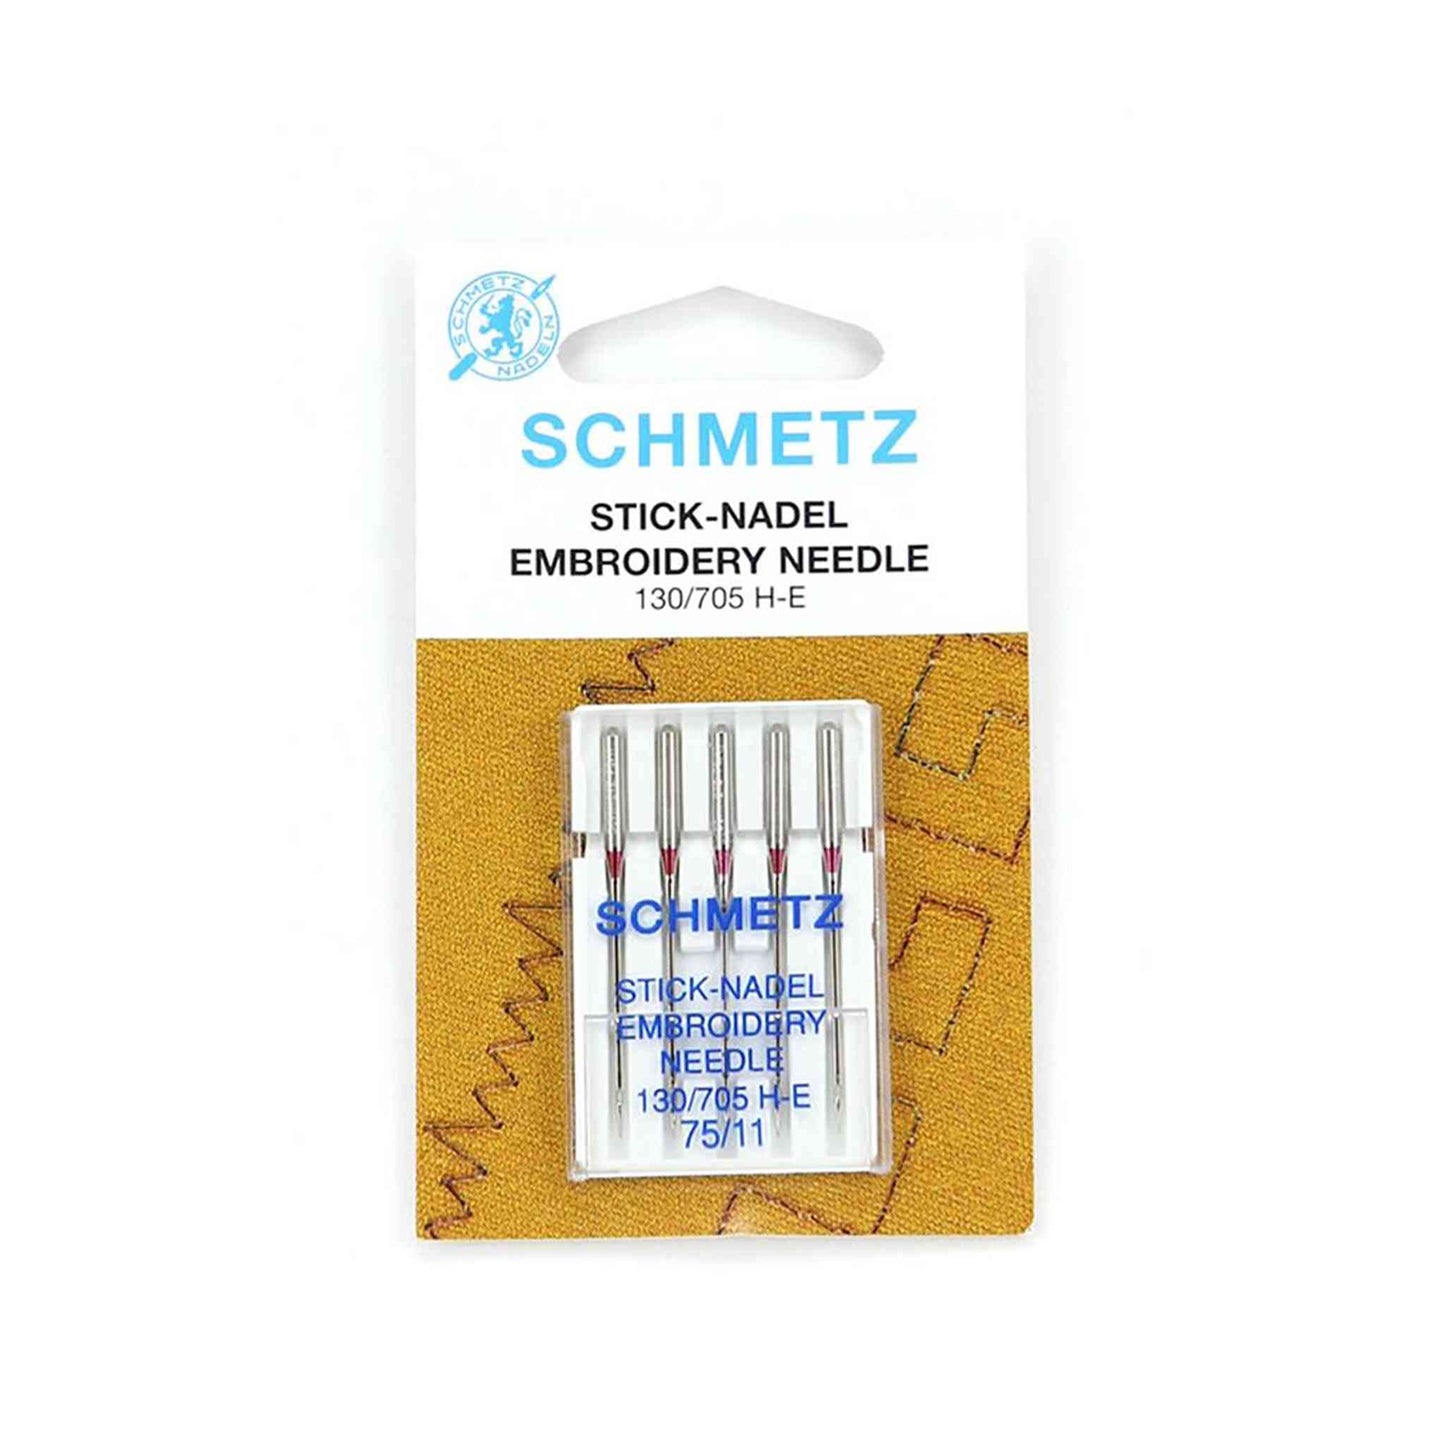 Schmetz Sewing Machine Needles (Various Types)